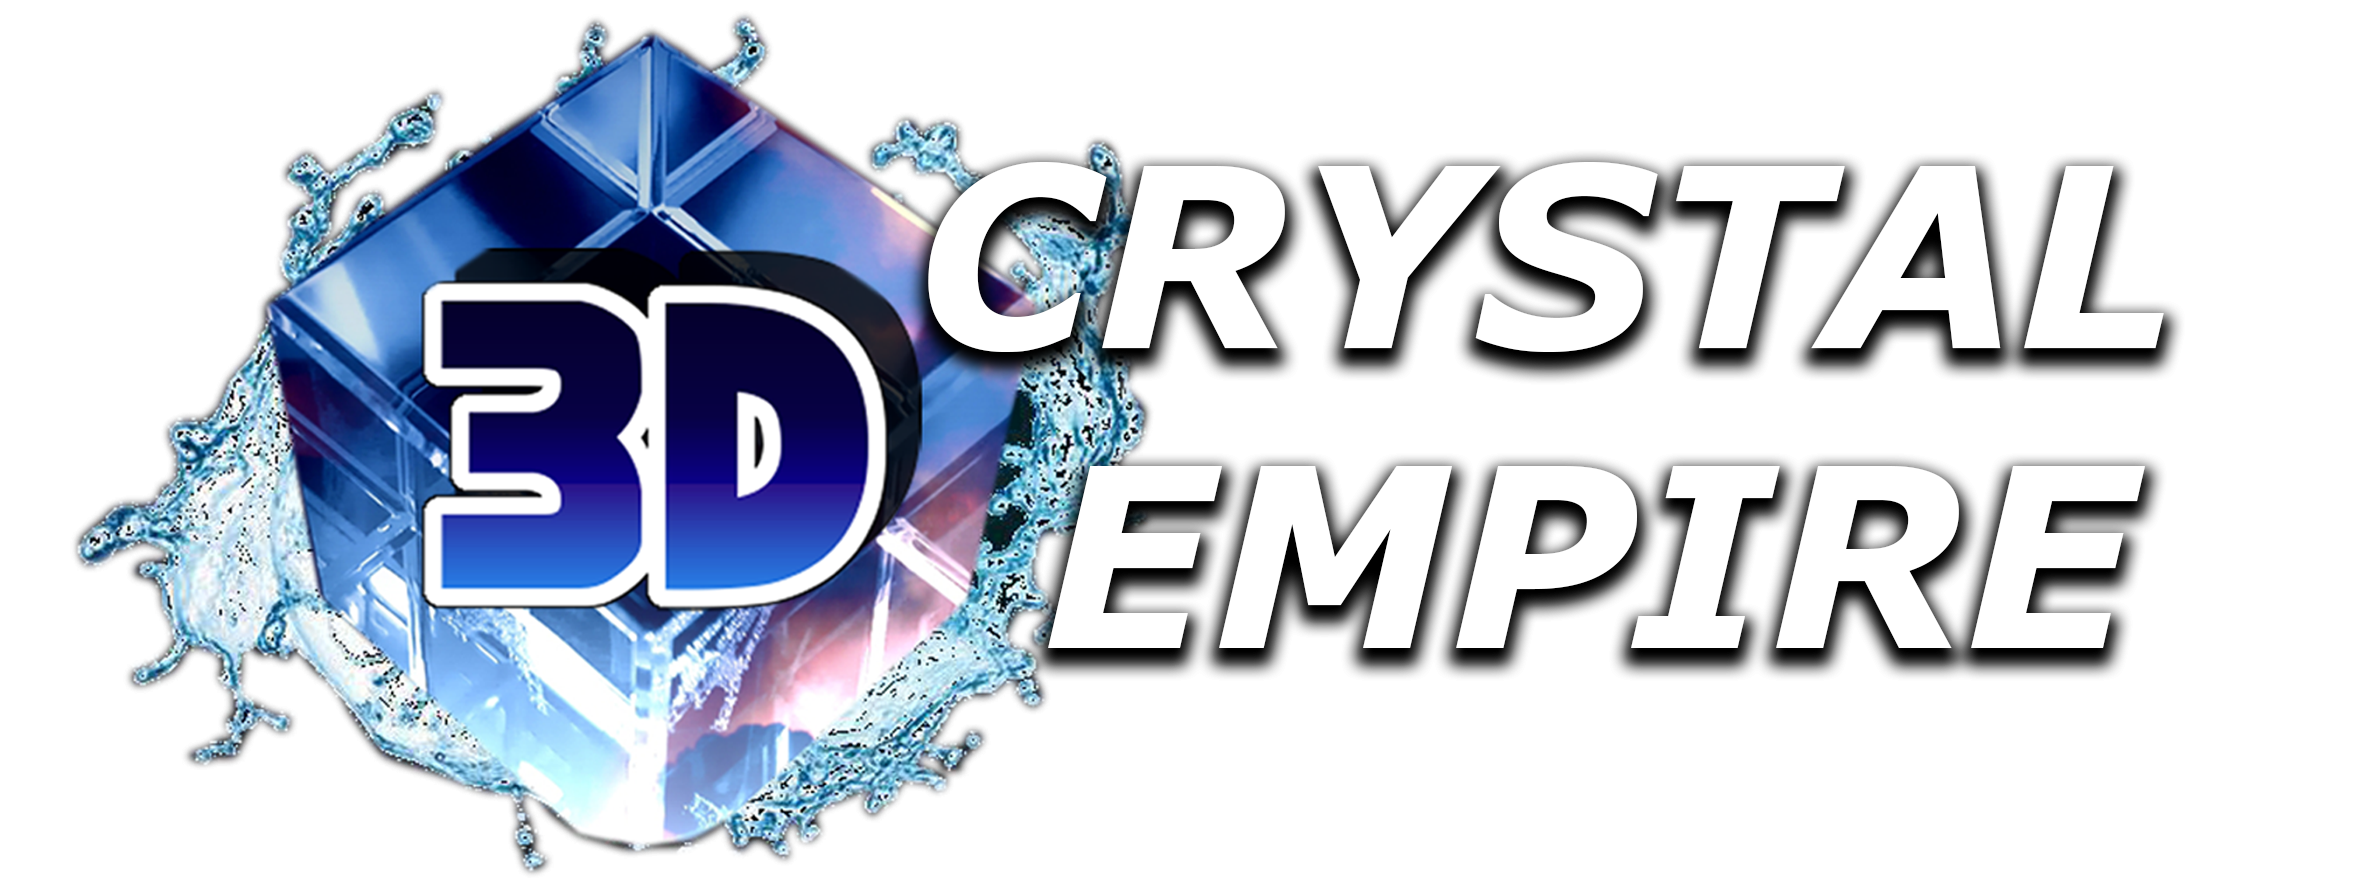 3D Crystal Empire